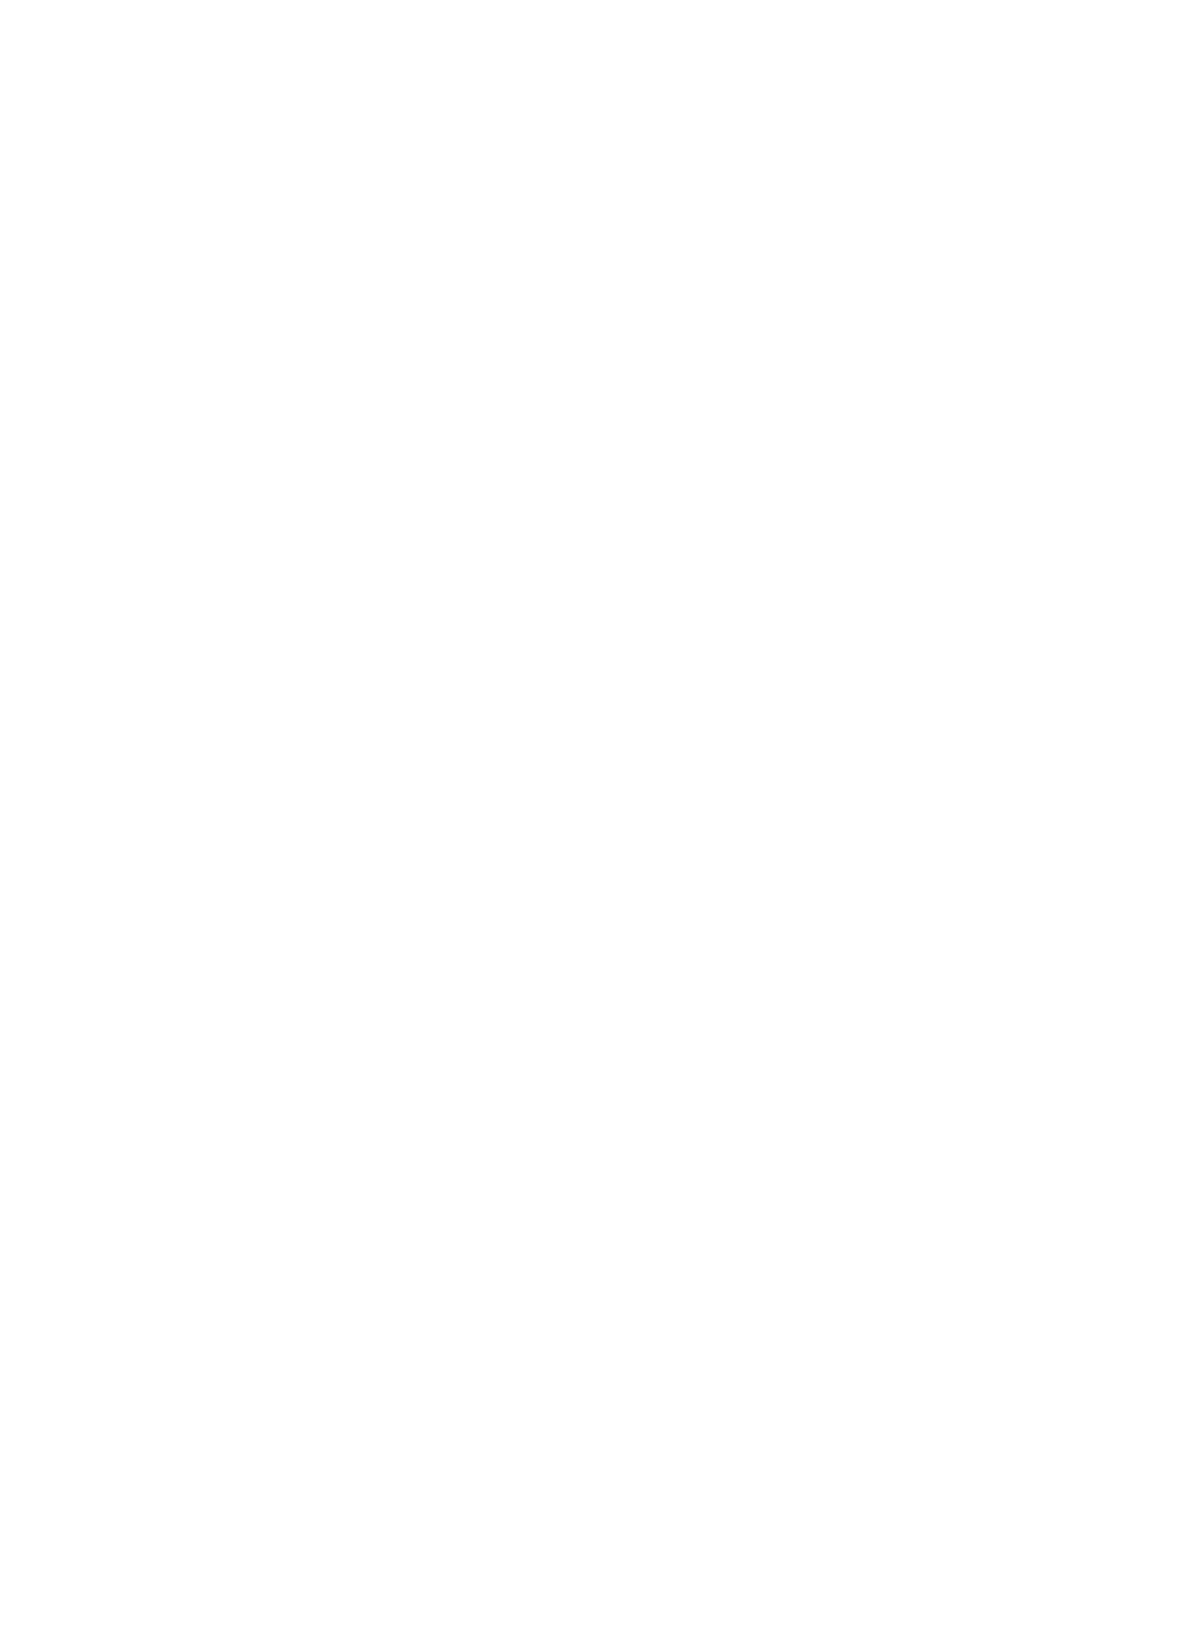 United_States_Soccer_Federation_logo_2016.svg